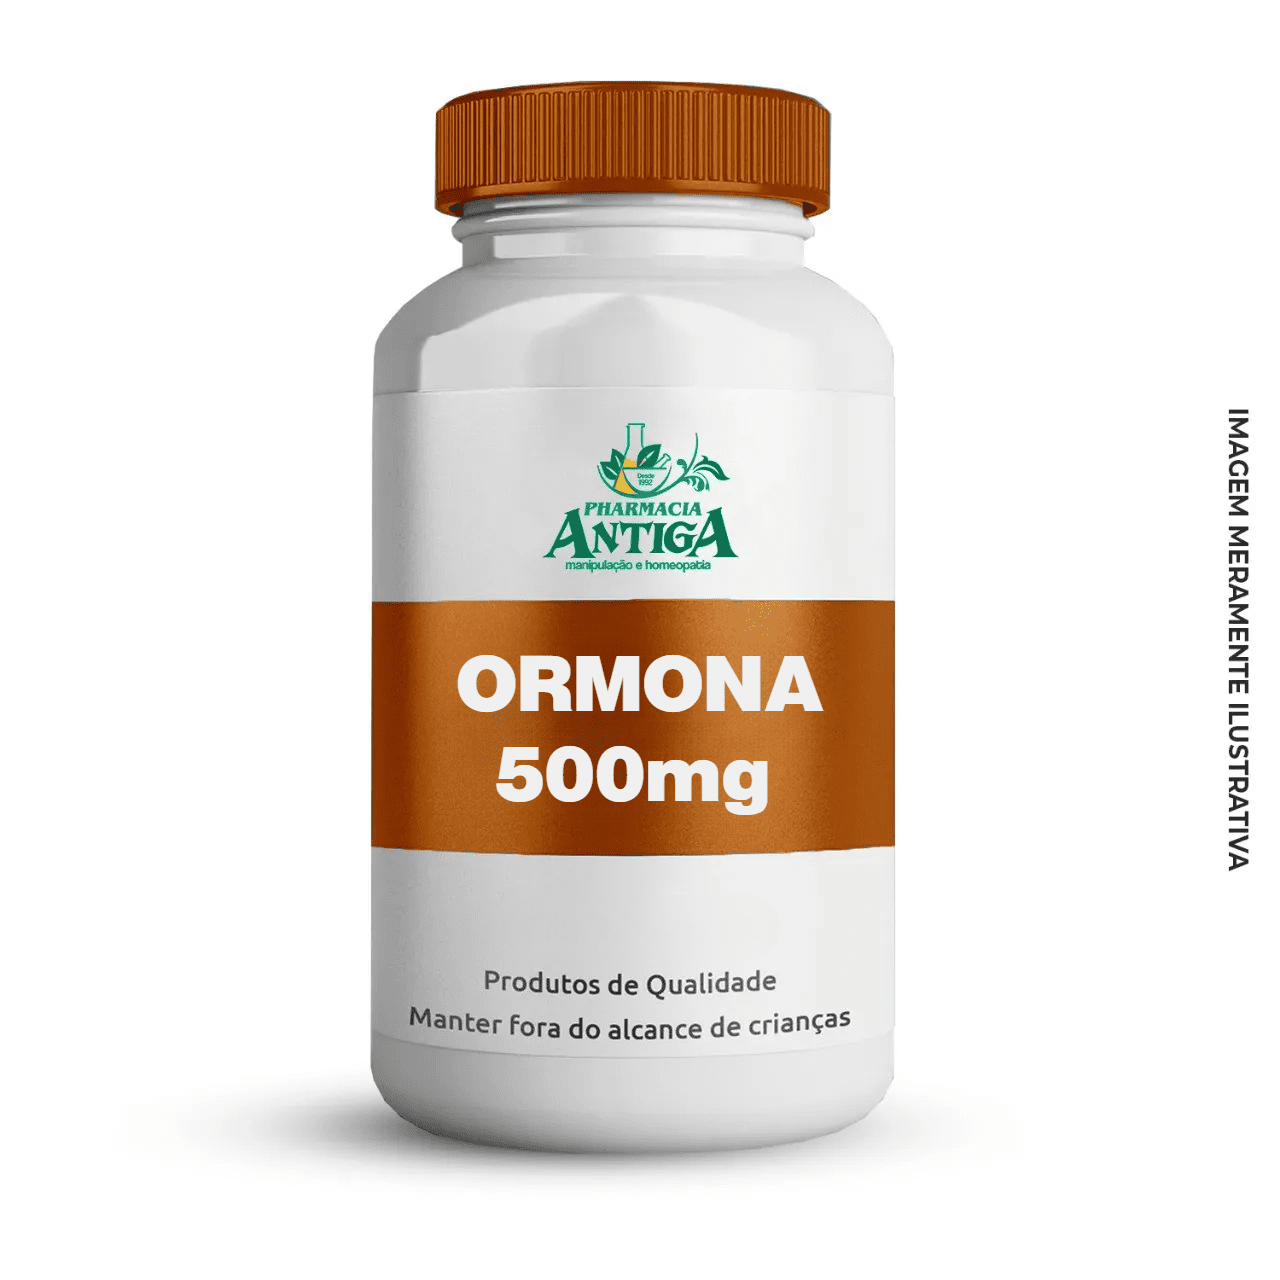 Ormona 500mg 30 cps